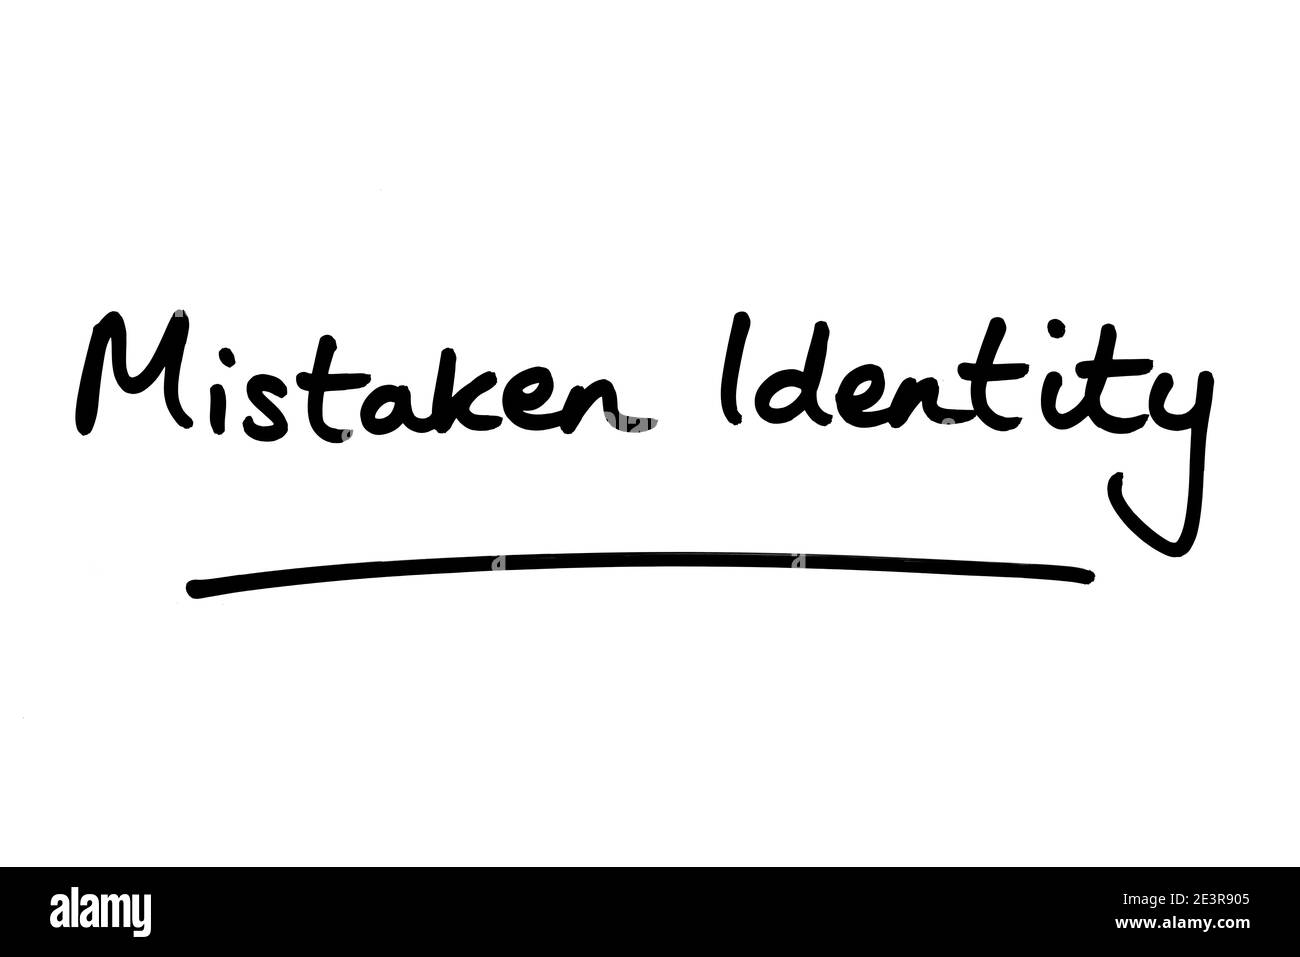 Mistaken Identity, handwritten on a white background. Stock Photo